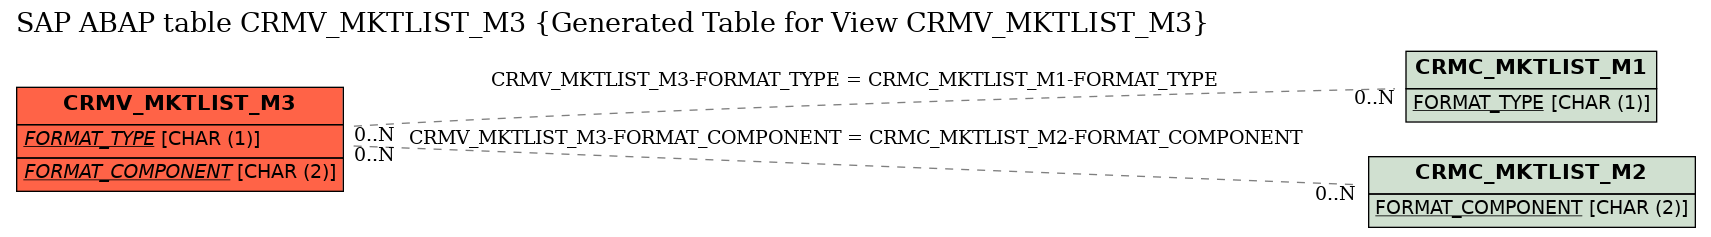 E-R Diagram for table CRMV_MKTLIST_M3 (Generated Table for View CRMV_MKTLIST_M3)